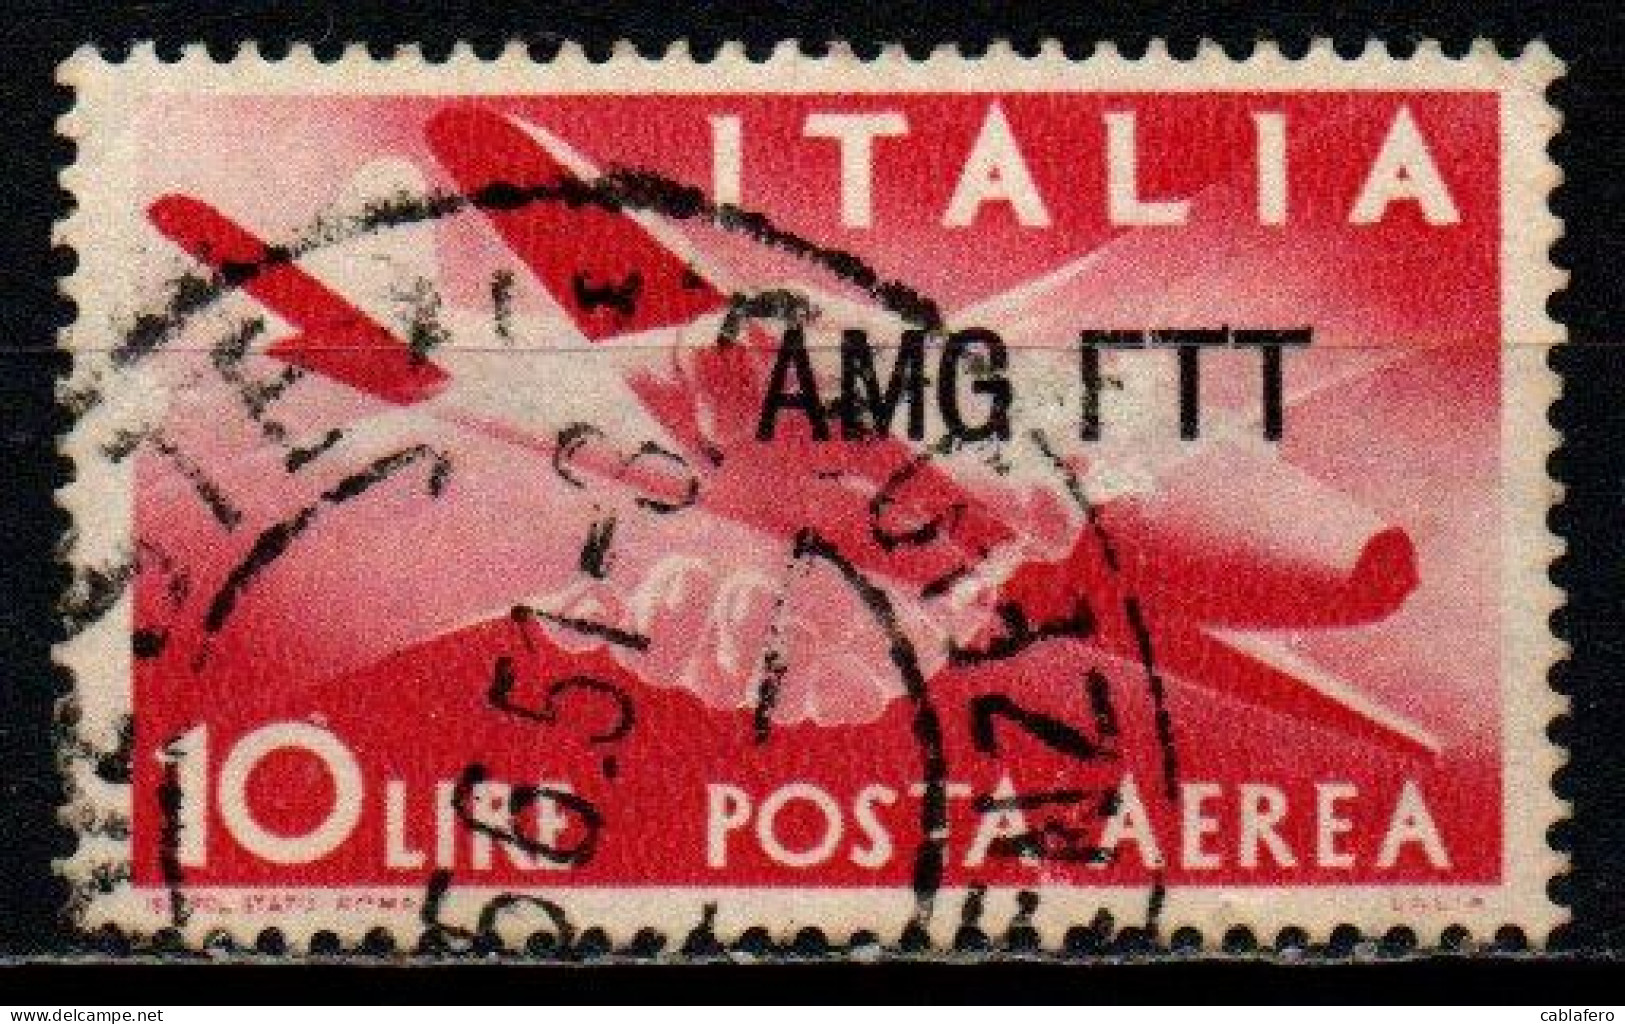 TRIESTE - AMGFTT - 1949 - DEMOCRATICA - SORASTAMPA SU UNA RIGA - 10 LIRE - USATO - Poste Aérienne